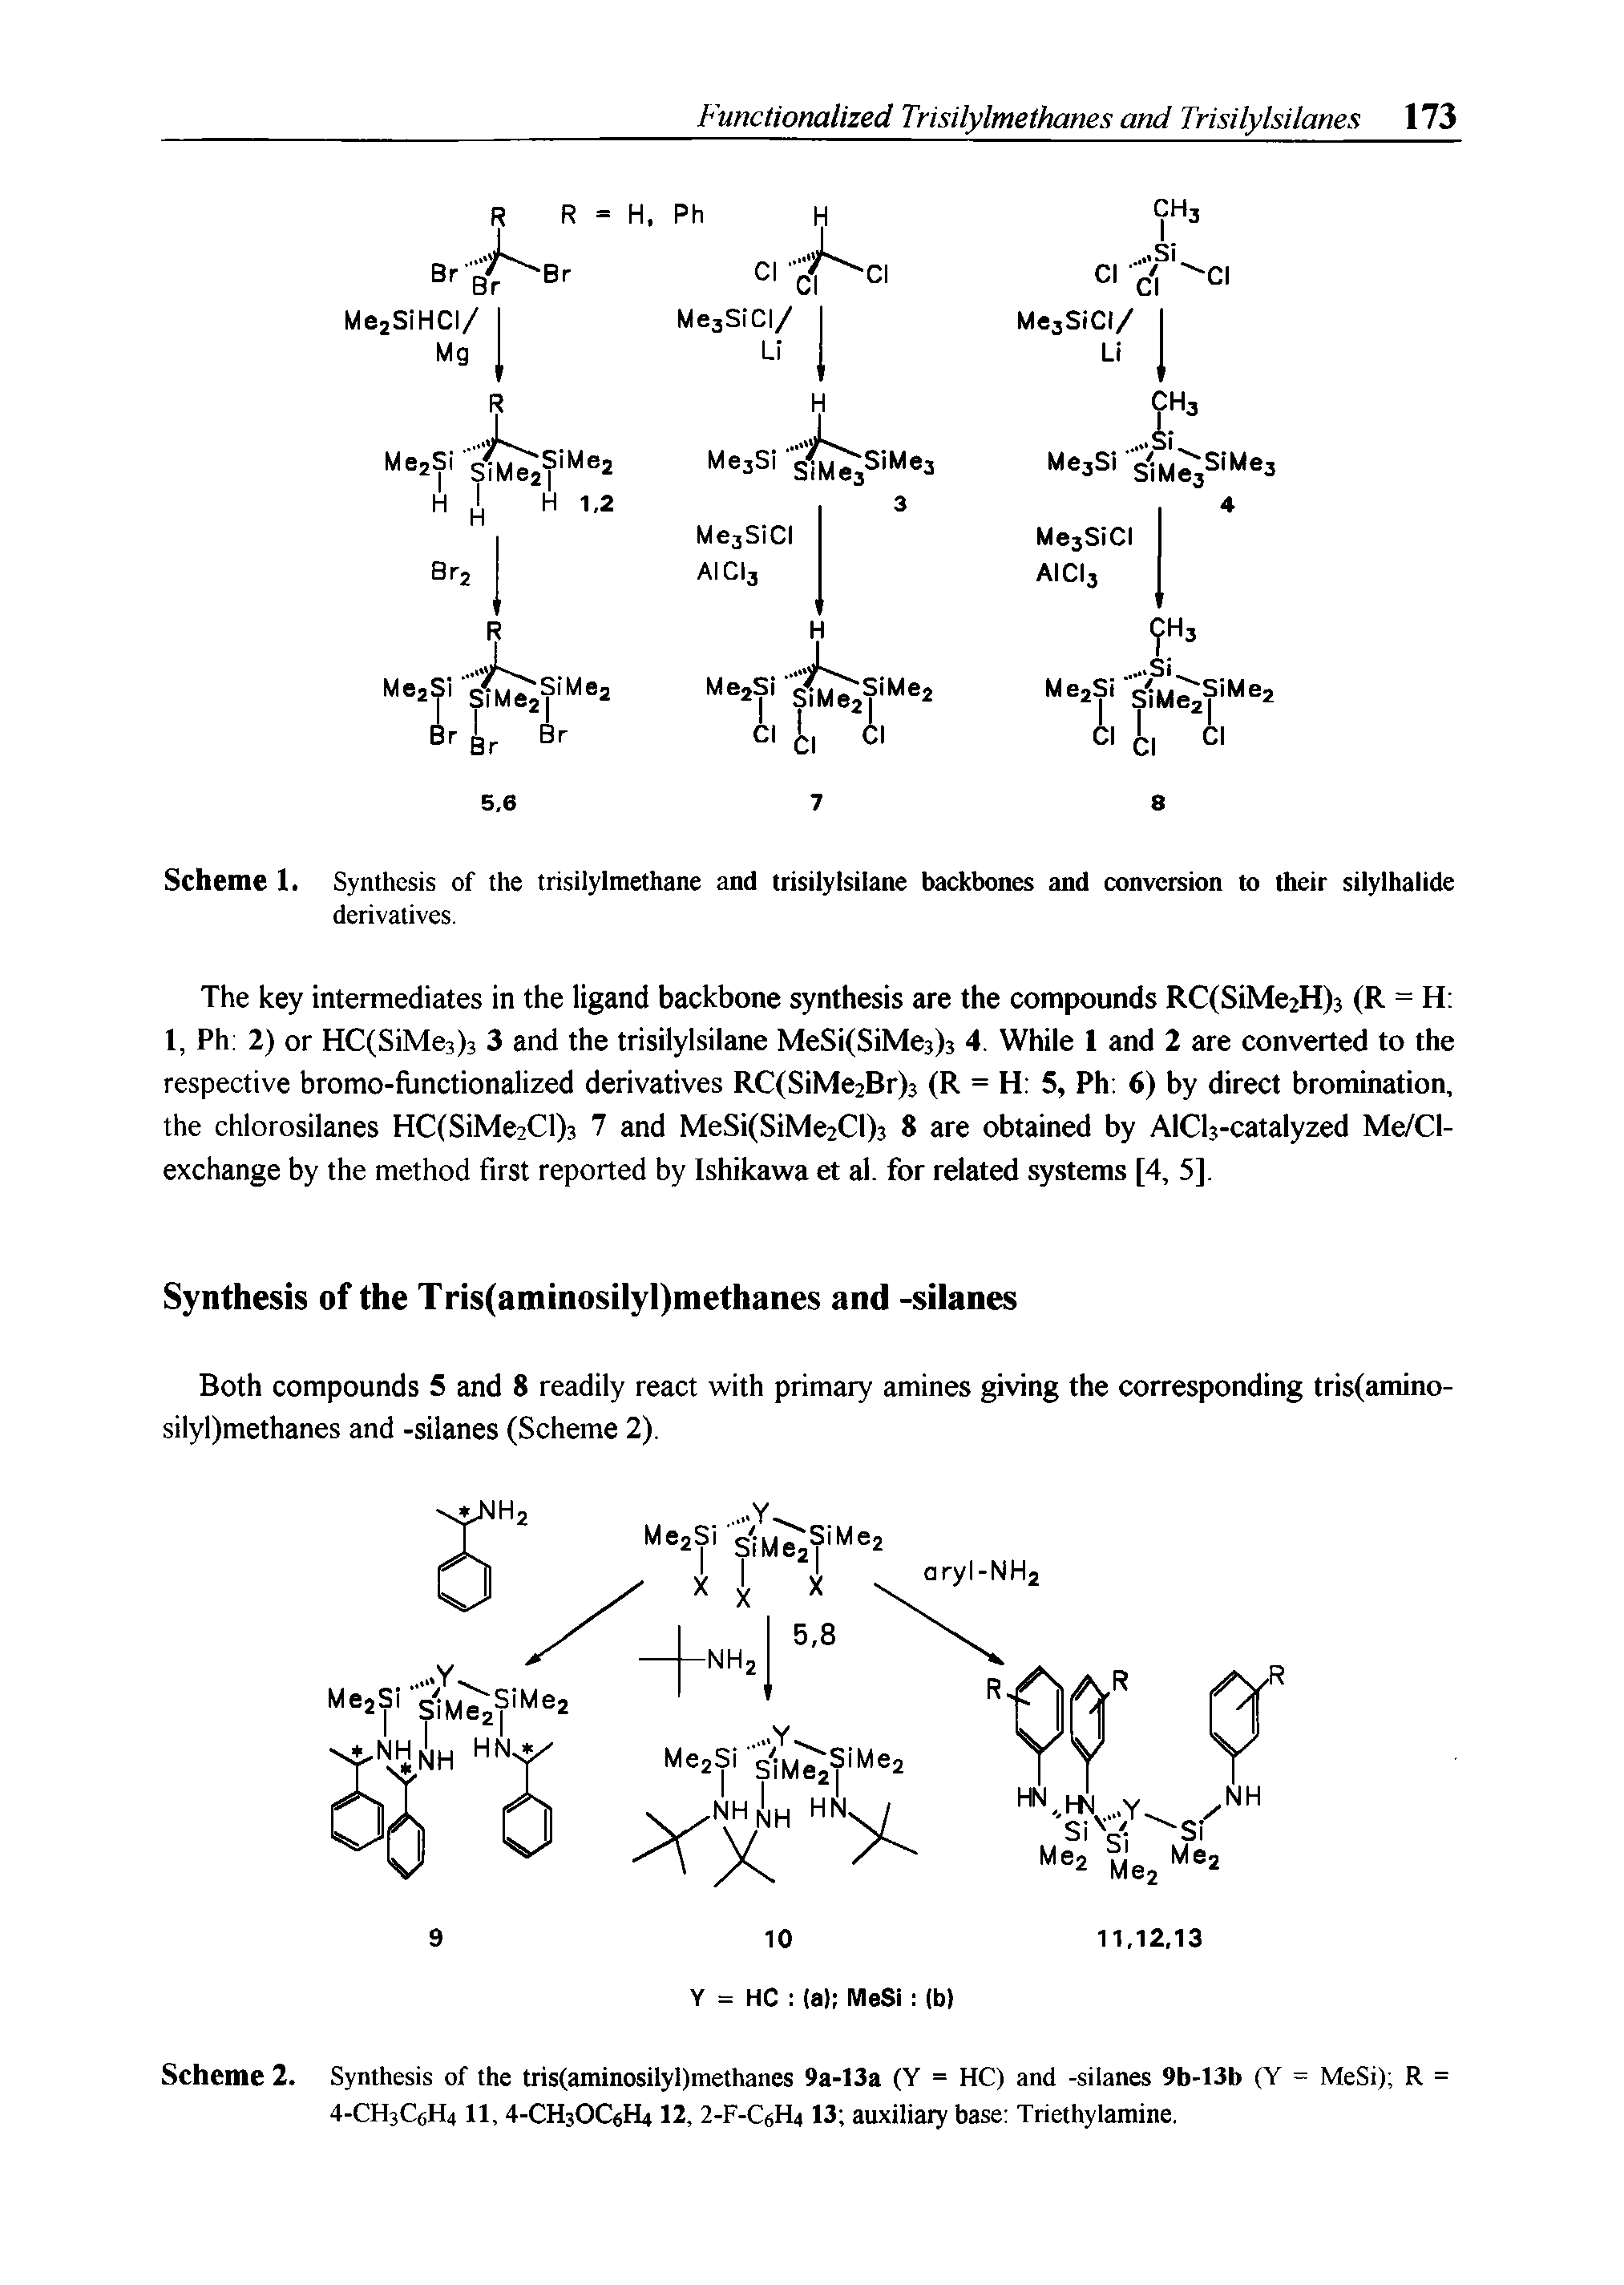 Scheme 2. Synthesis of the tris(aminosilyl)methanes 9a-13a (Y = HC) and -silanes 9b-13b (Y = MeSi) R = 4-CH3C6H4 11, 4-CH3OC6H4 12, 2-F-C6H4 13 auxiliary base Triethylamine.